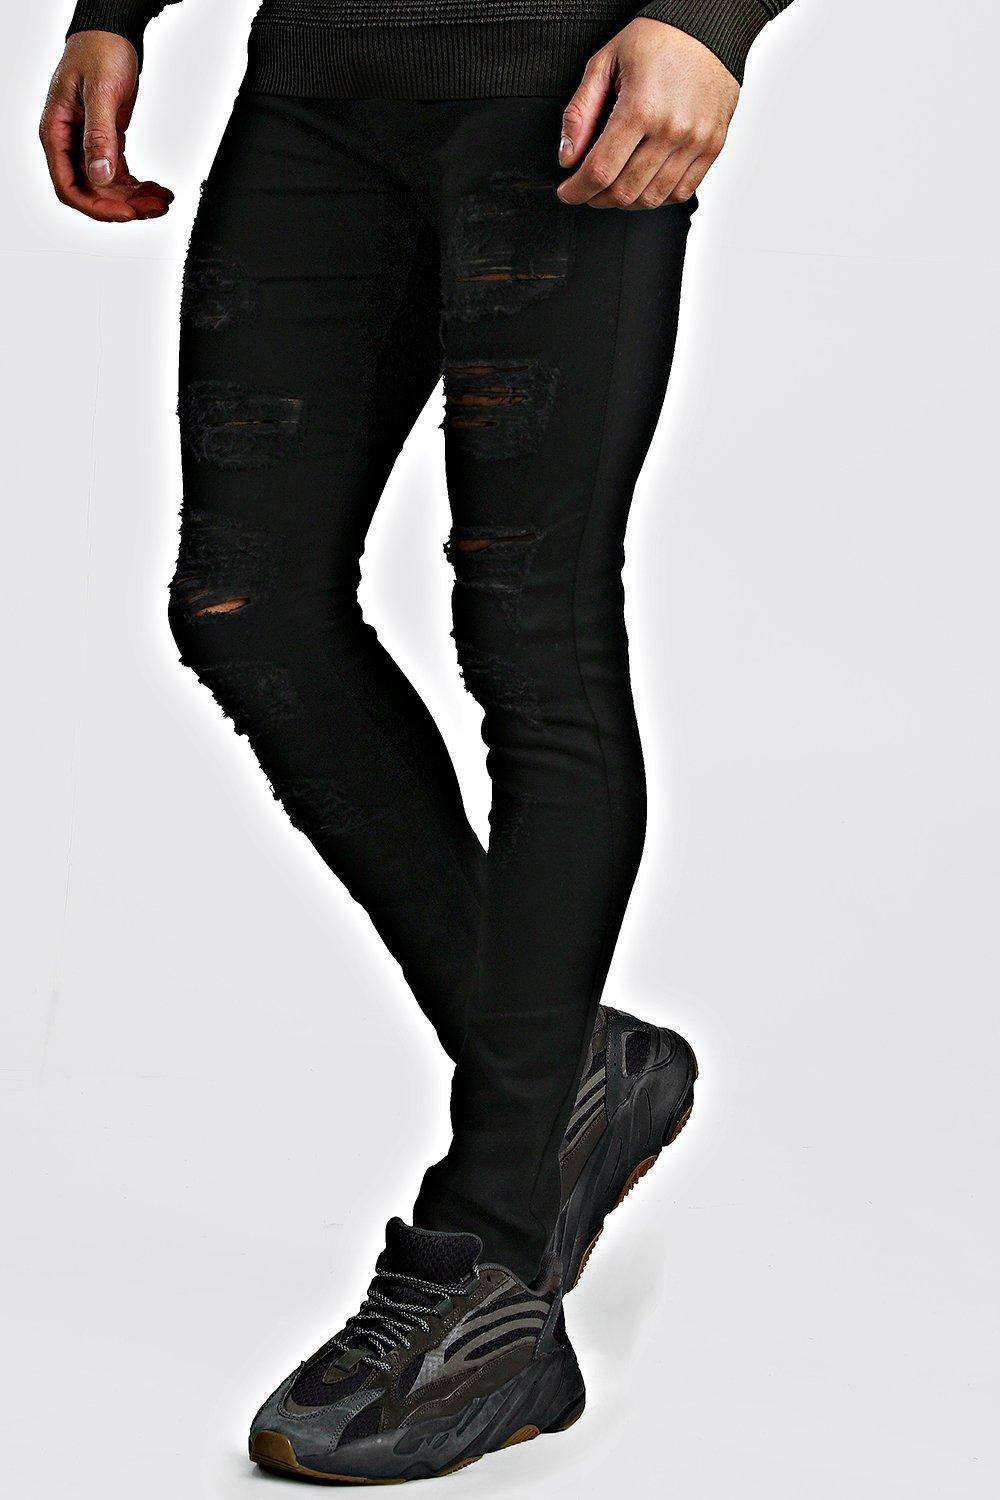 boohooMAN Mens Super Skinny Jeans - Black